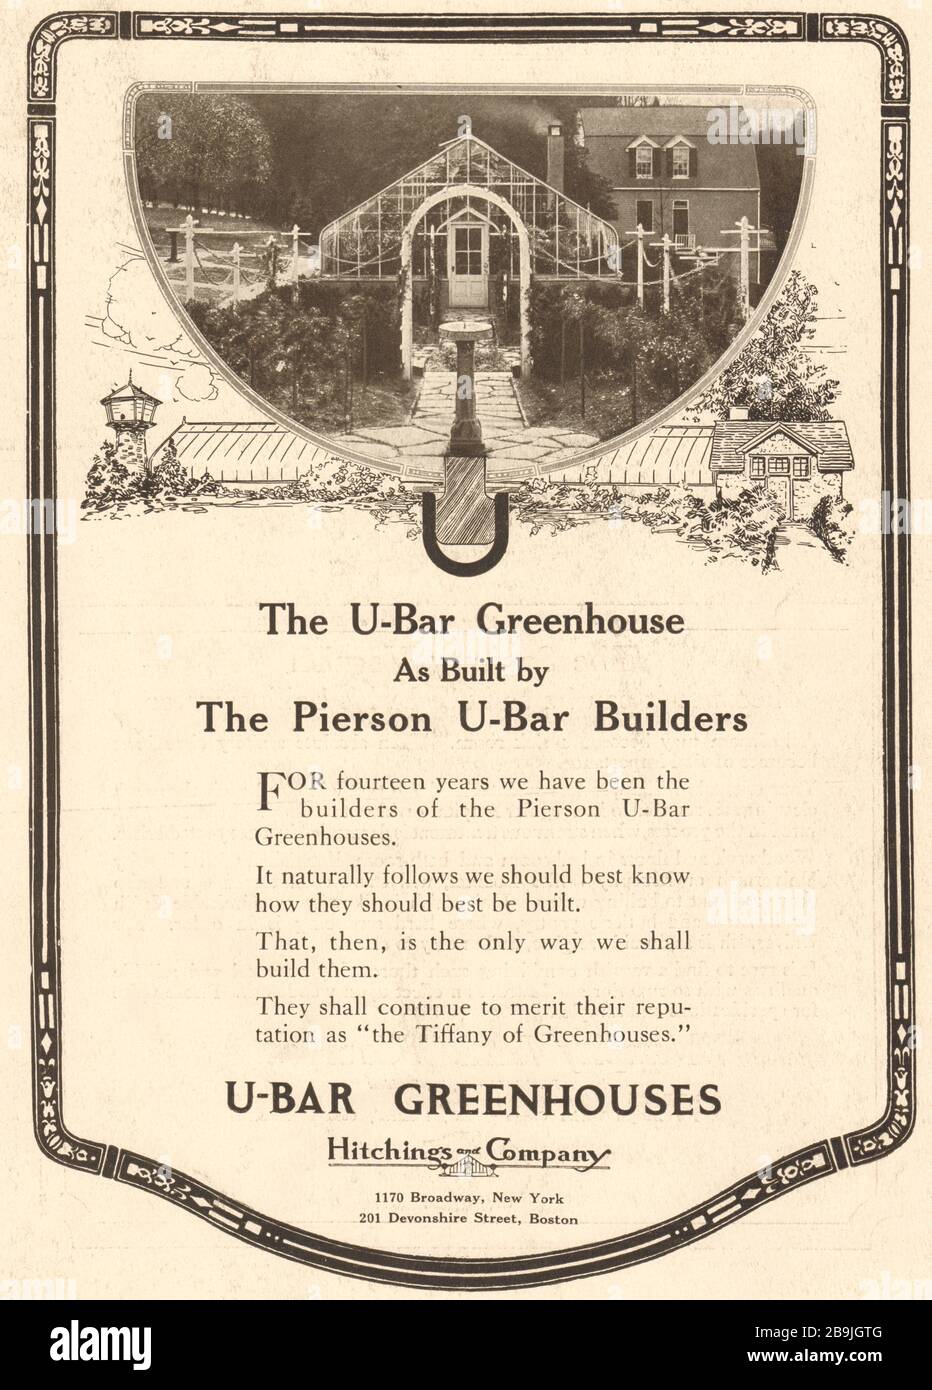 Pierson U-bar builders. U-bar Greenhouses. Hitchings & Company, 1170 Broadway, New York; 201 Devonshire Street, Boston (1919) Stock Photo